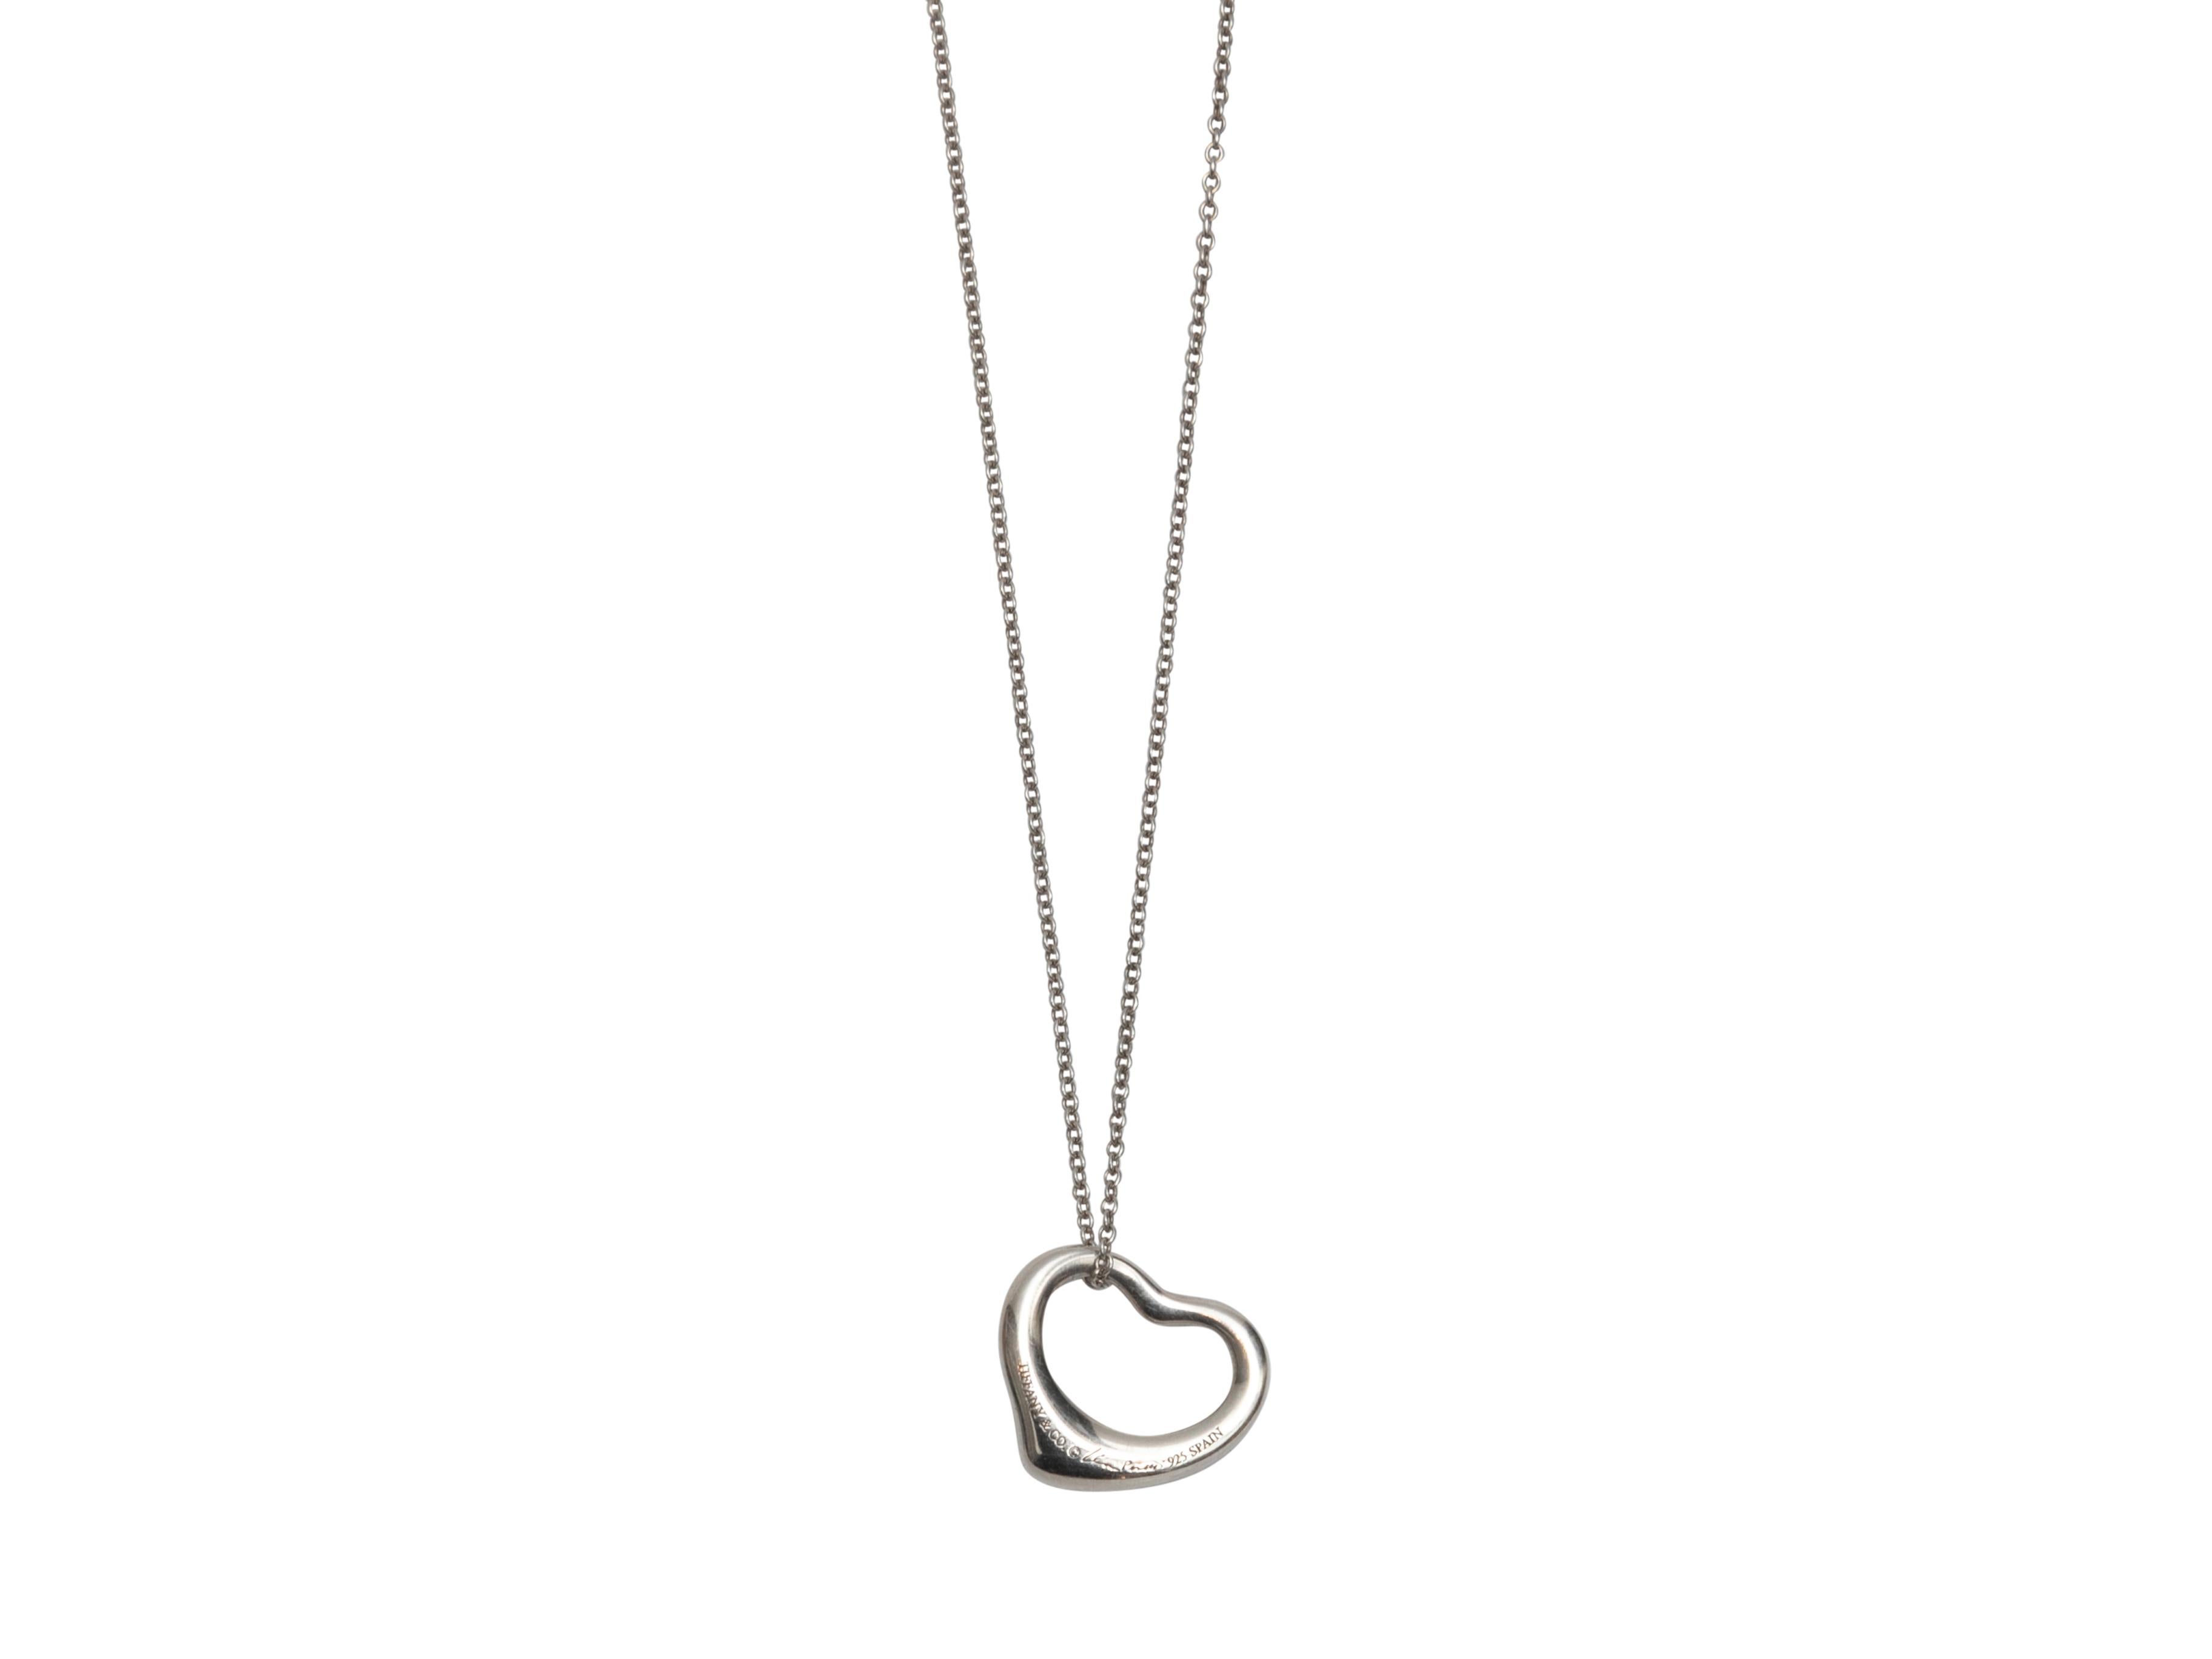 Sterling silver Elsa Peretti Open Heart pendant necklace by Tiffany & Co. Clasp closure. 9